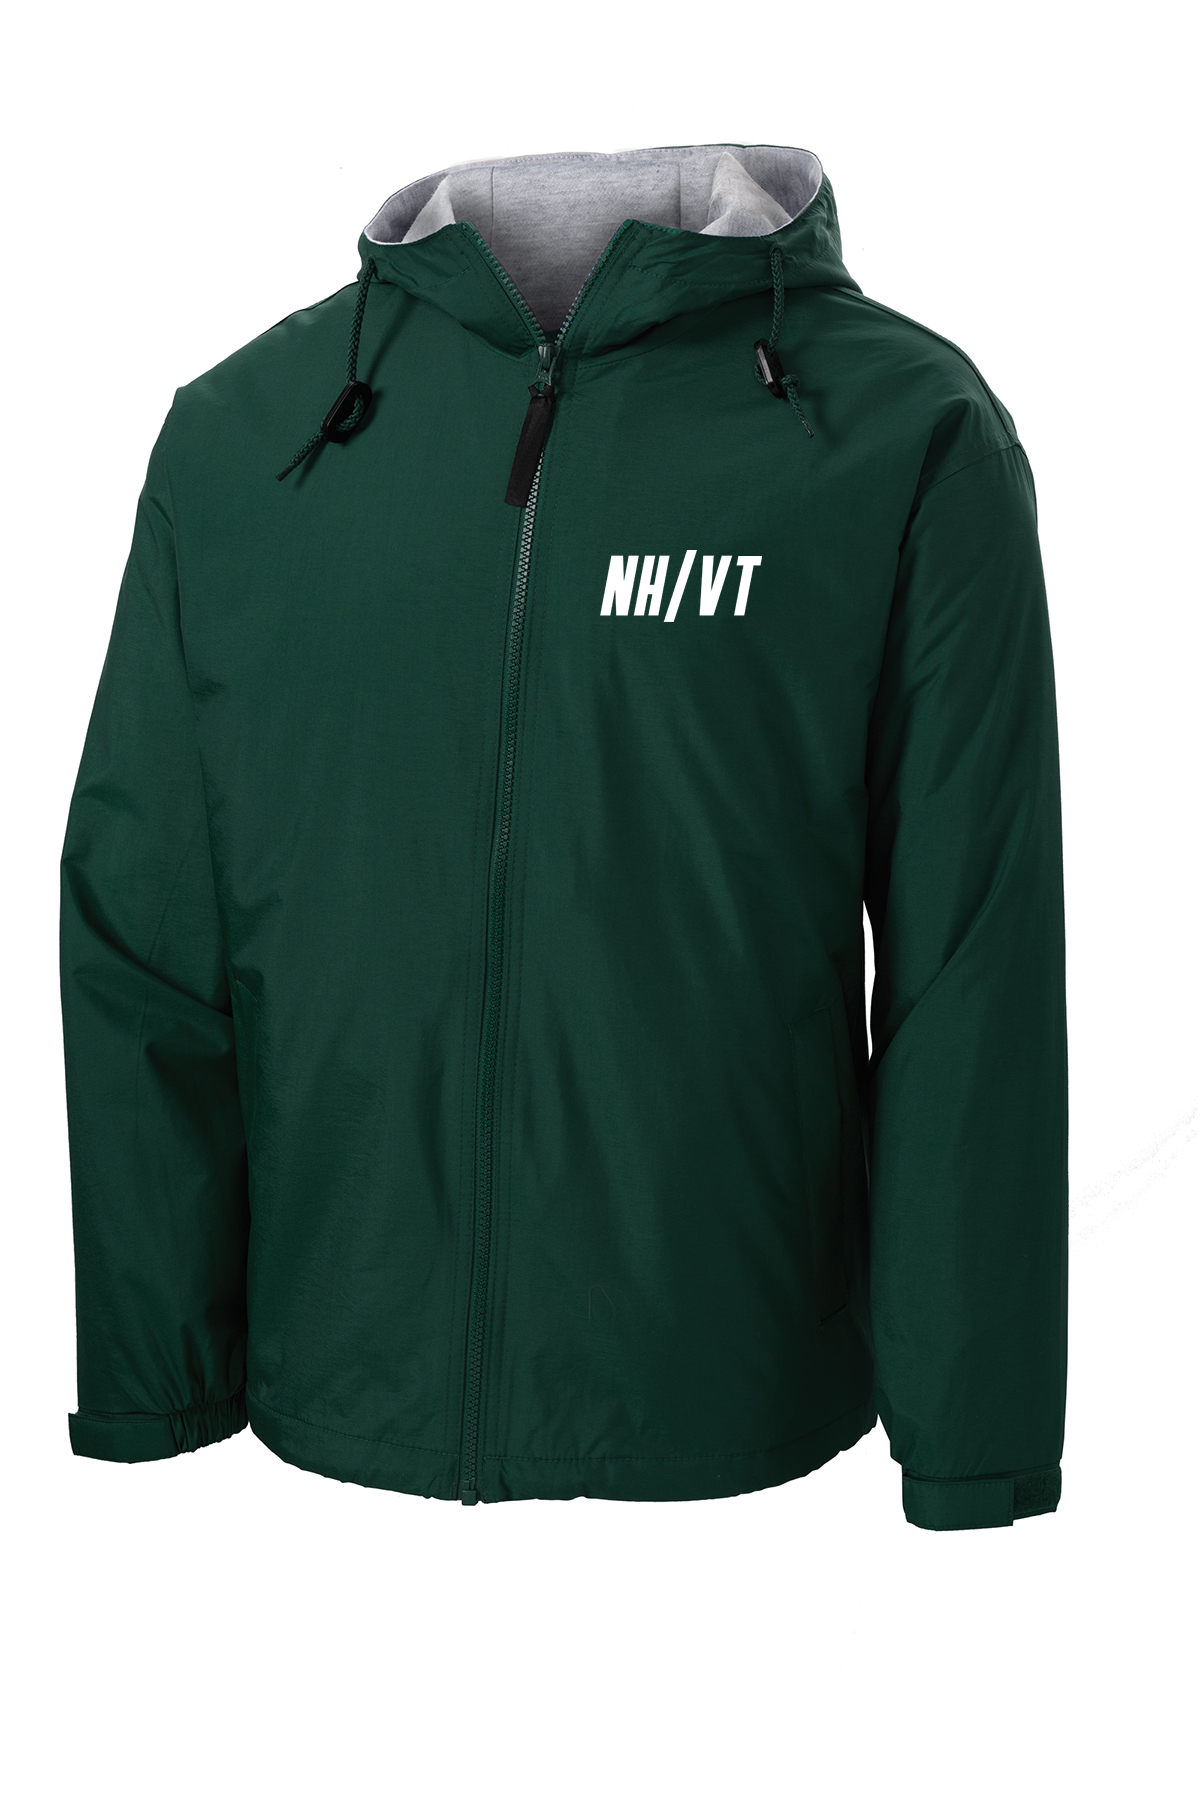 NH/VT Lacrosse Hooded Jacket